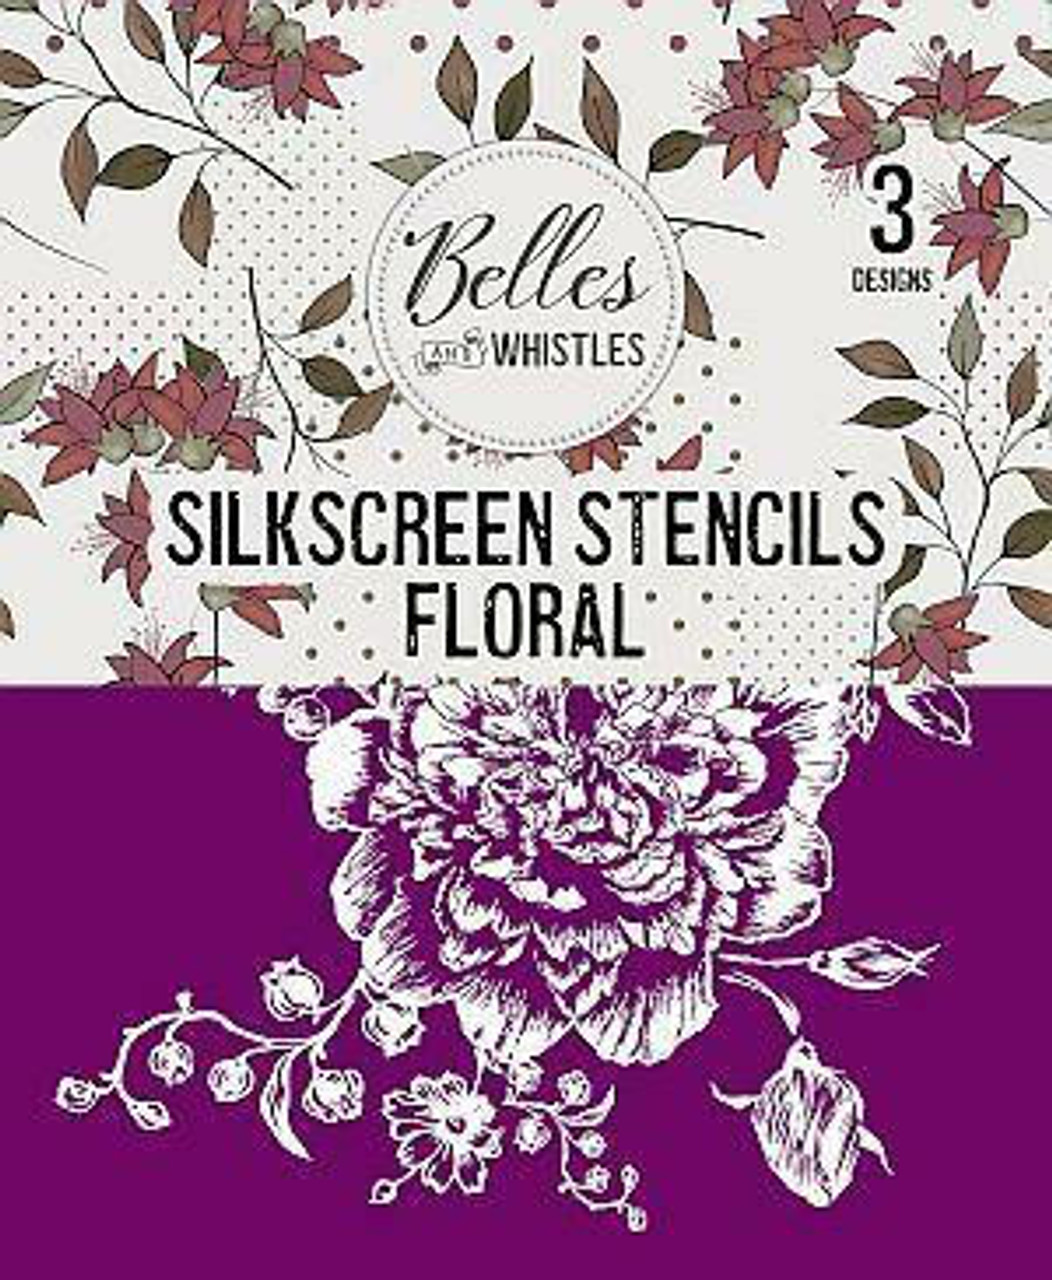 Floral - Silkscreen Stencil - Dixie Belle Paint